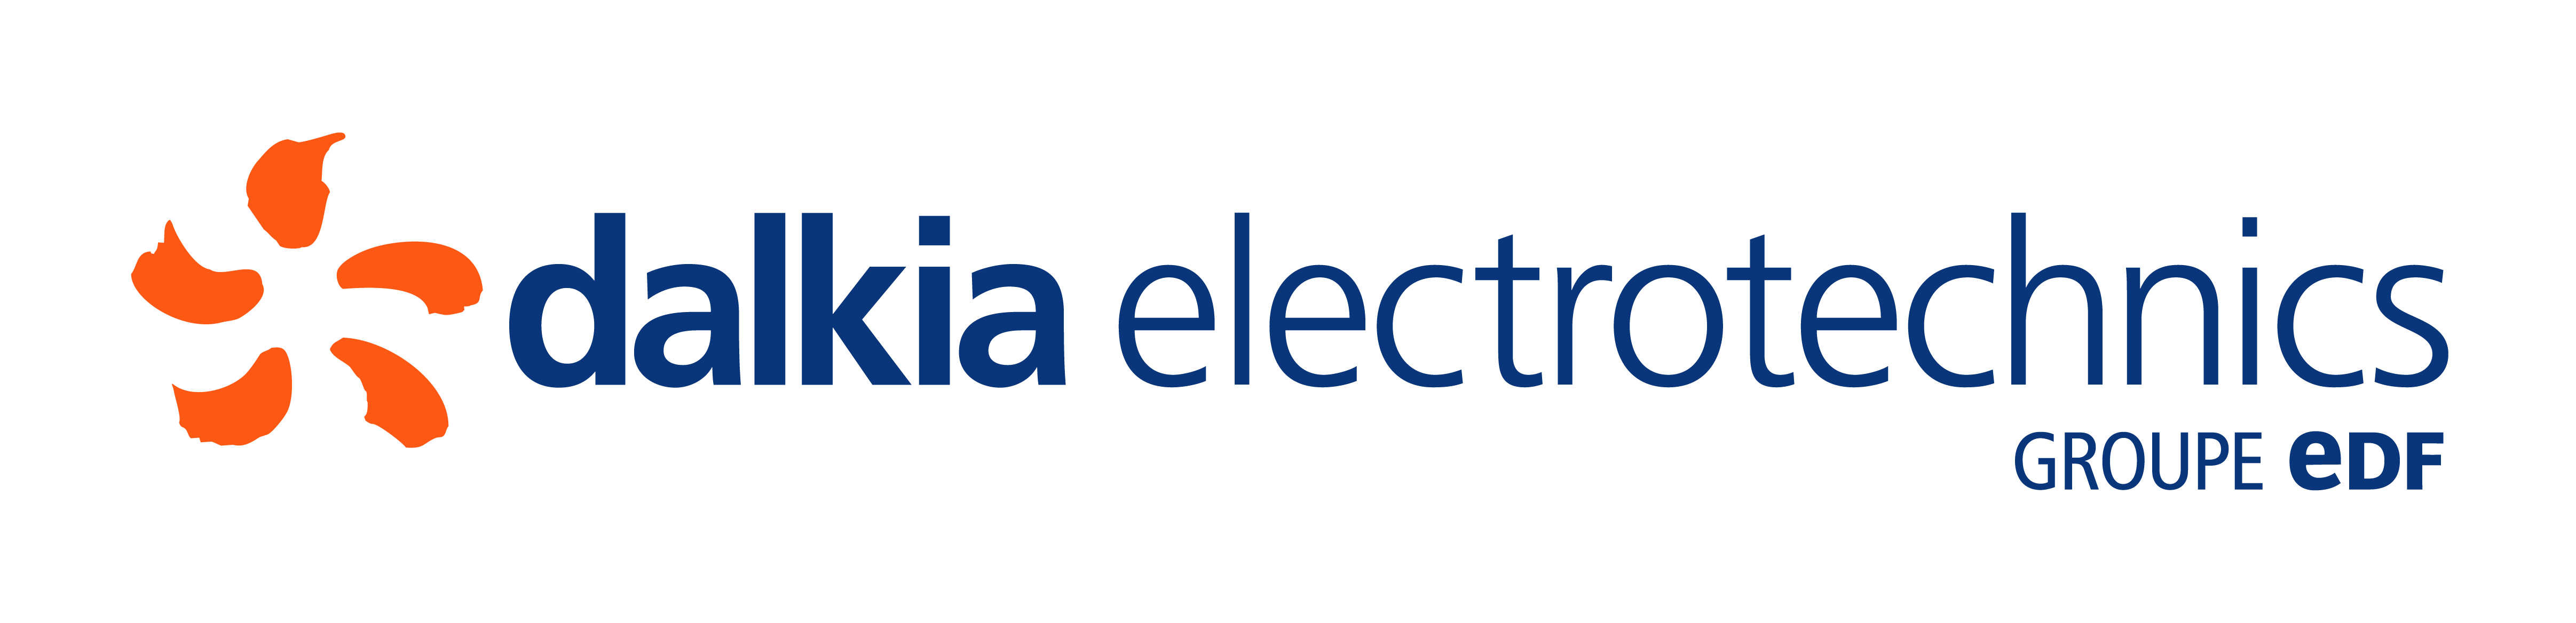 Dalkia Electritechnics groupe EDF